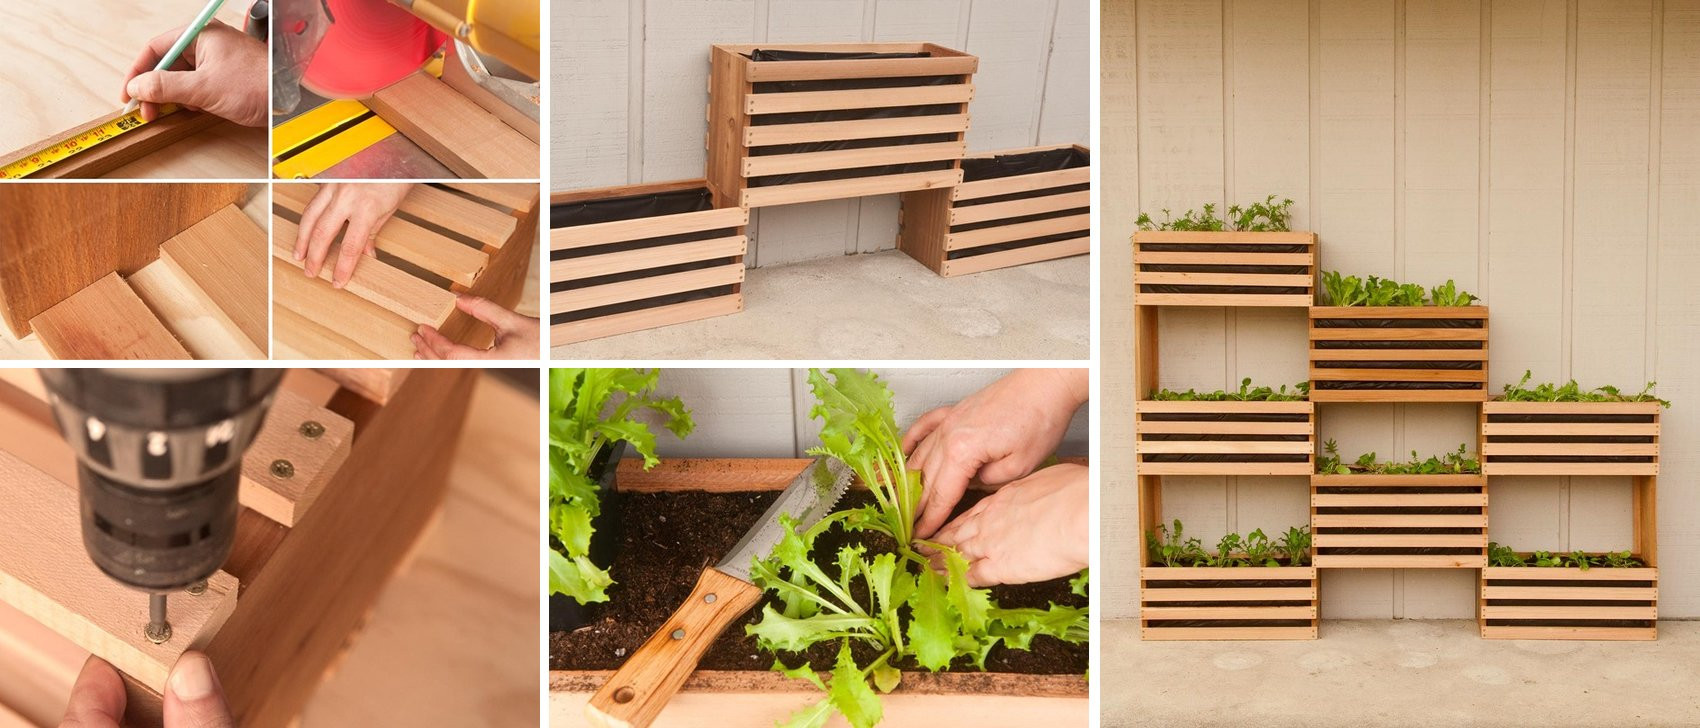 Best ideas about Vertical Vegetable Garden DIY
. Save or Pin Wonderful DIY Vertical PVC Planter Now.